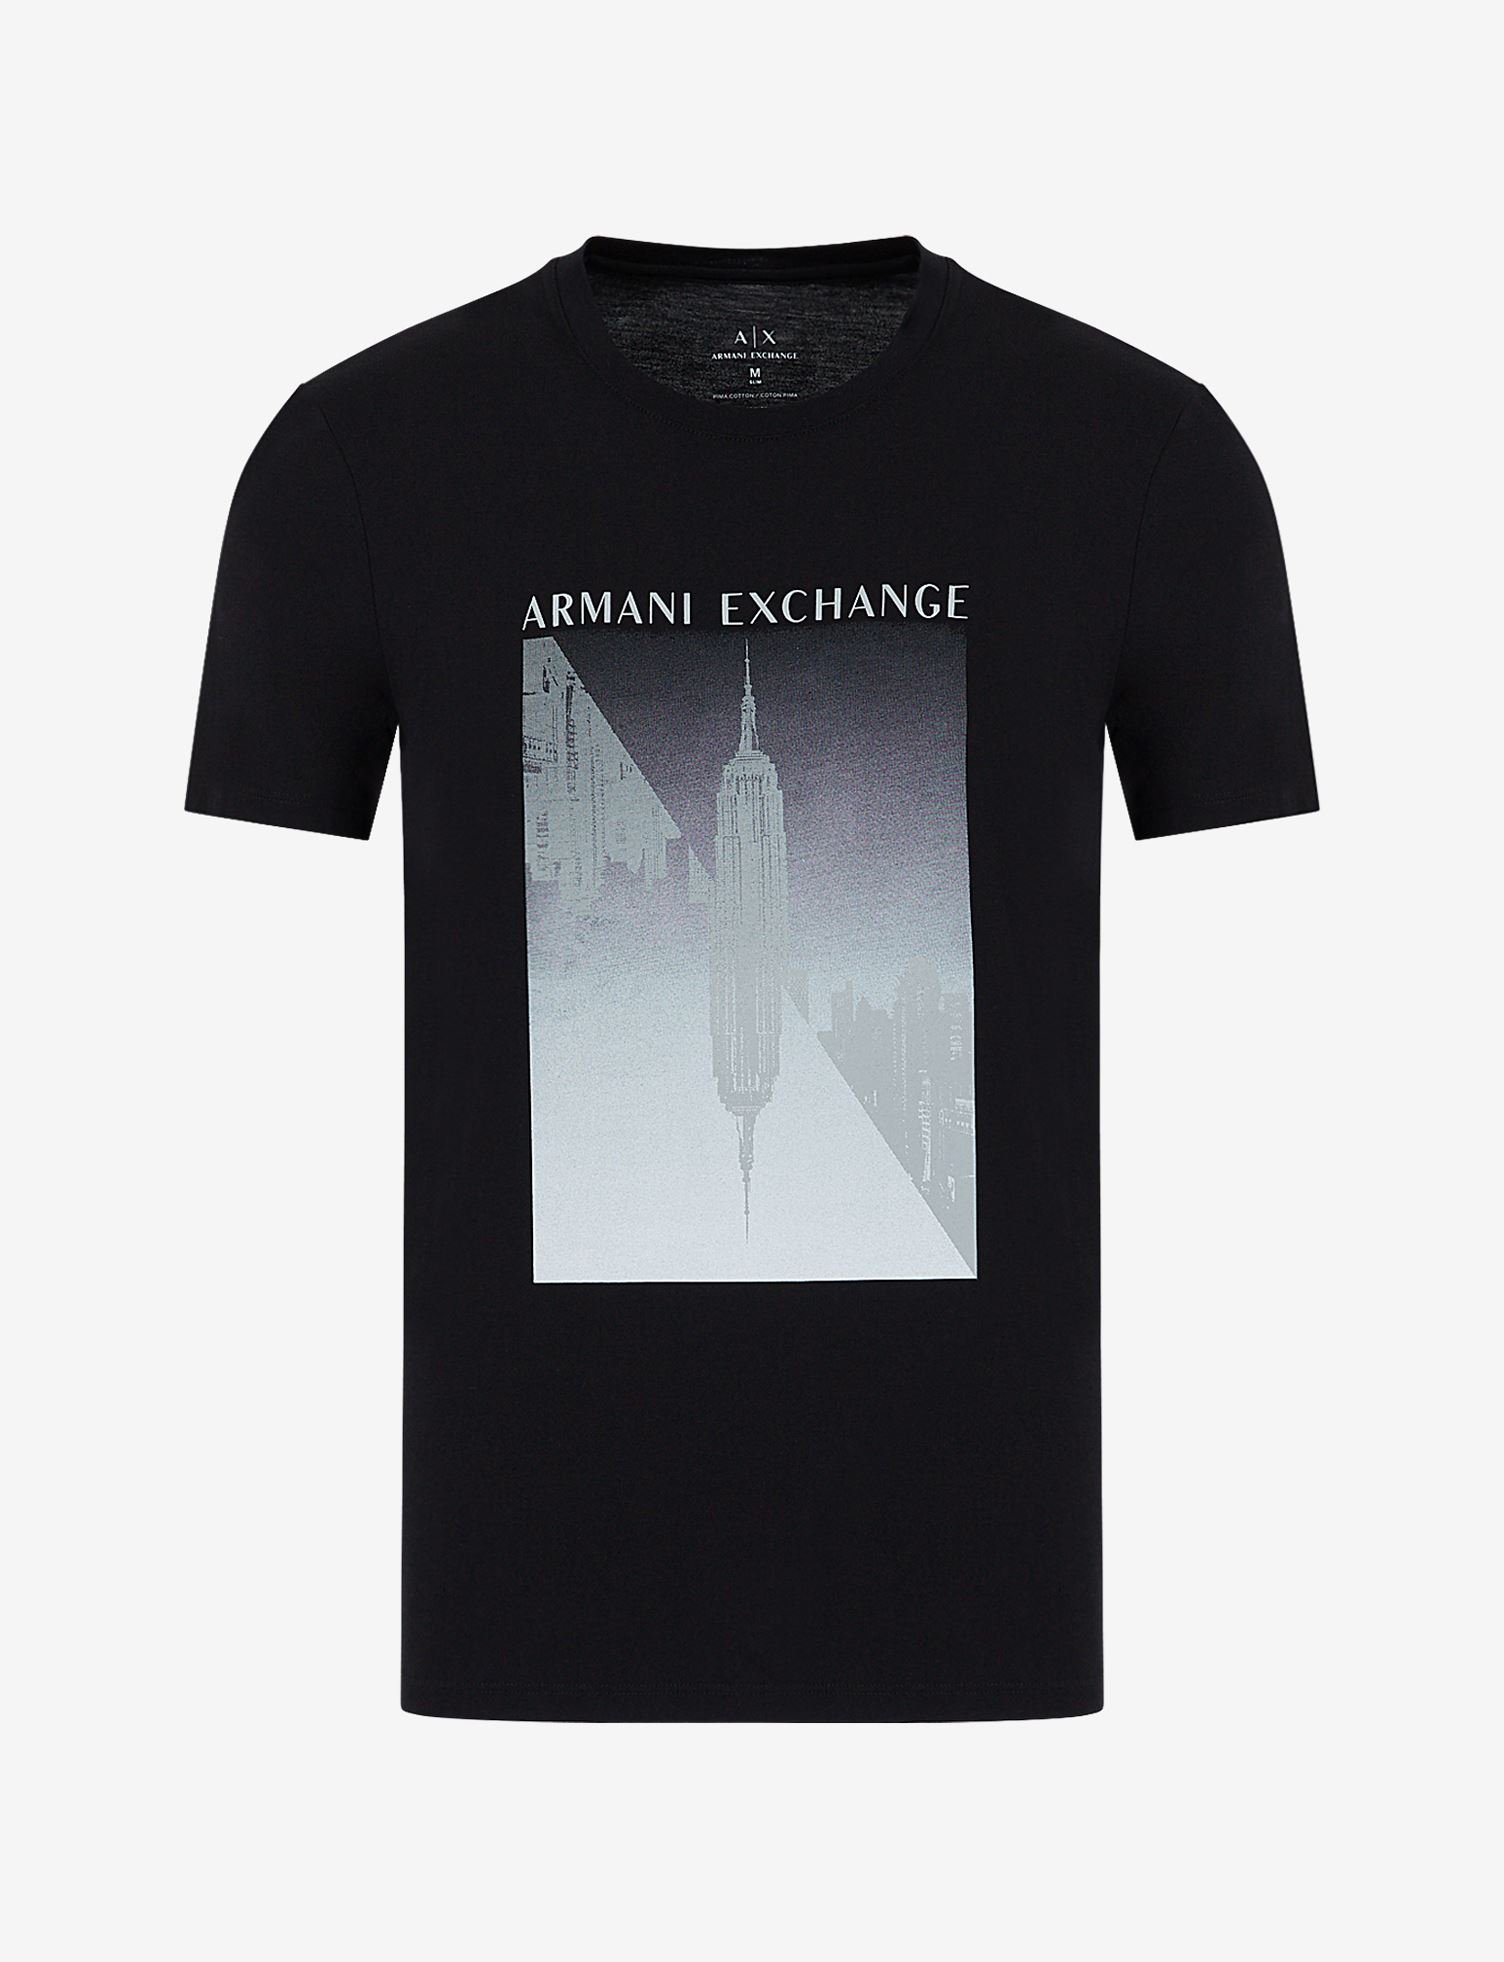 Image of Armani Exchange M's T-shirt graphique Grösse L Herren